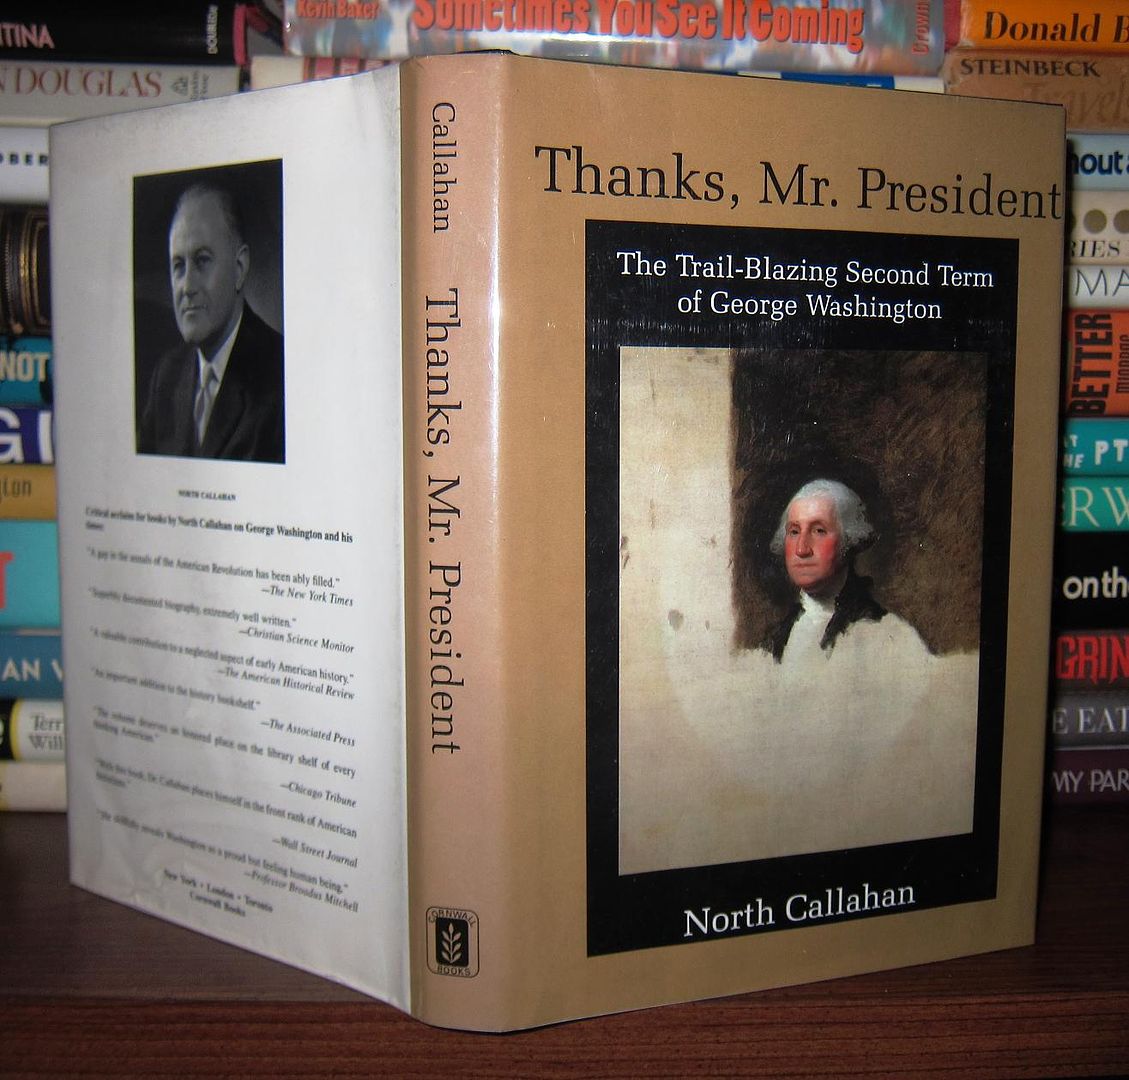 CALLAHAN, NORTH - Thanks, Mr. President the Trail-Blazing Second Term of George Washington